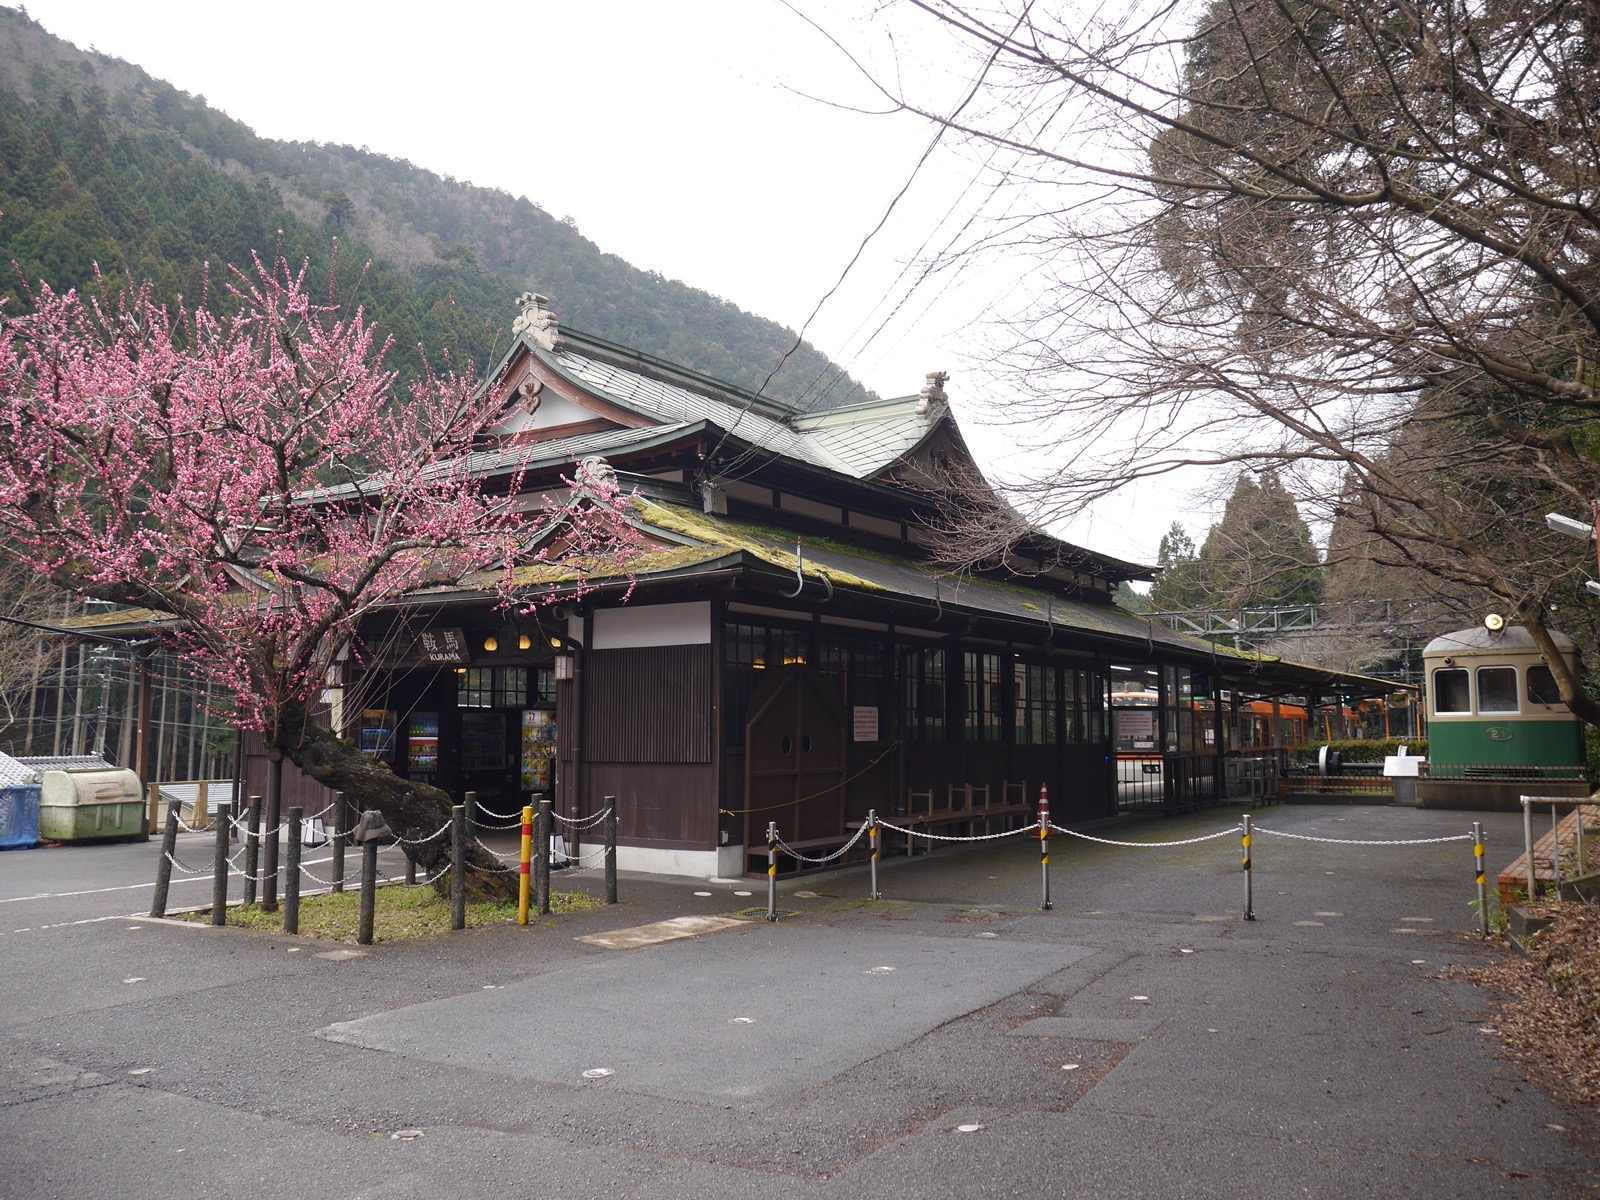 Photo of Kurama Station, Japan (紅梅の咲く時期の叡山電鉄鞍馬駅 Prunus mume tree and Kuirama station by Hahifuheho)